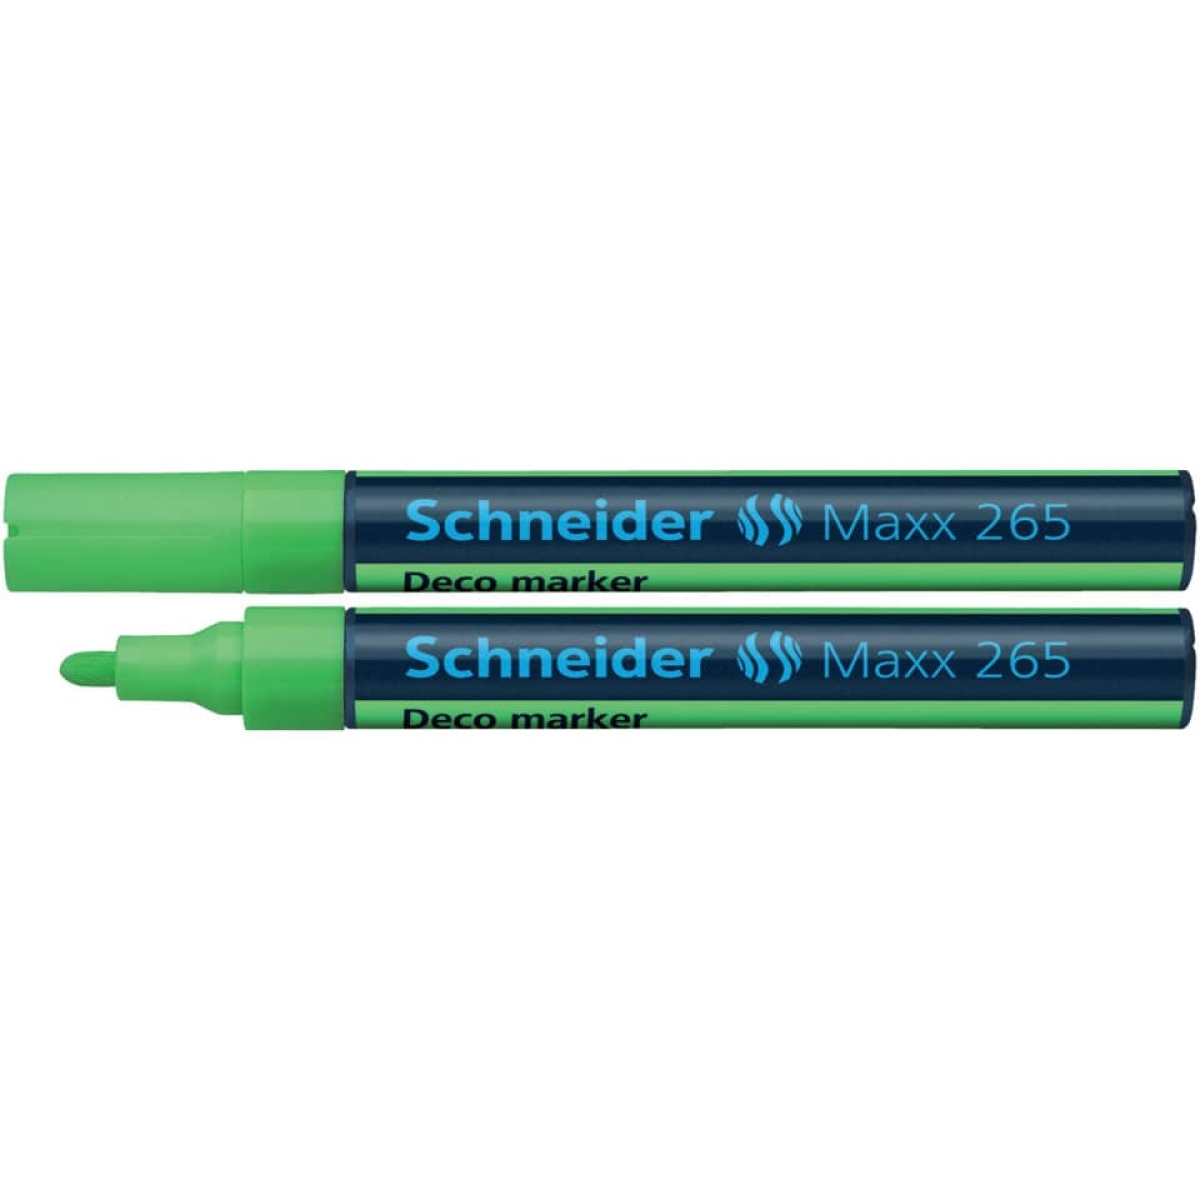 SCHNEIDERWindowmarker Decomarker Maxx 265, 2-3 mm, light green126511Article-No: 4004675007506